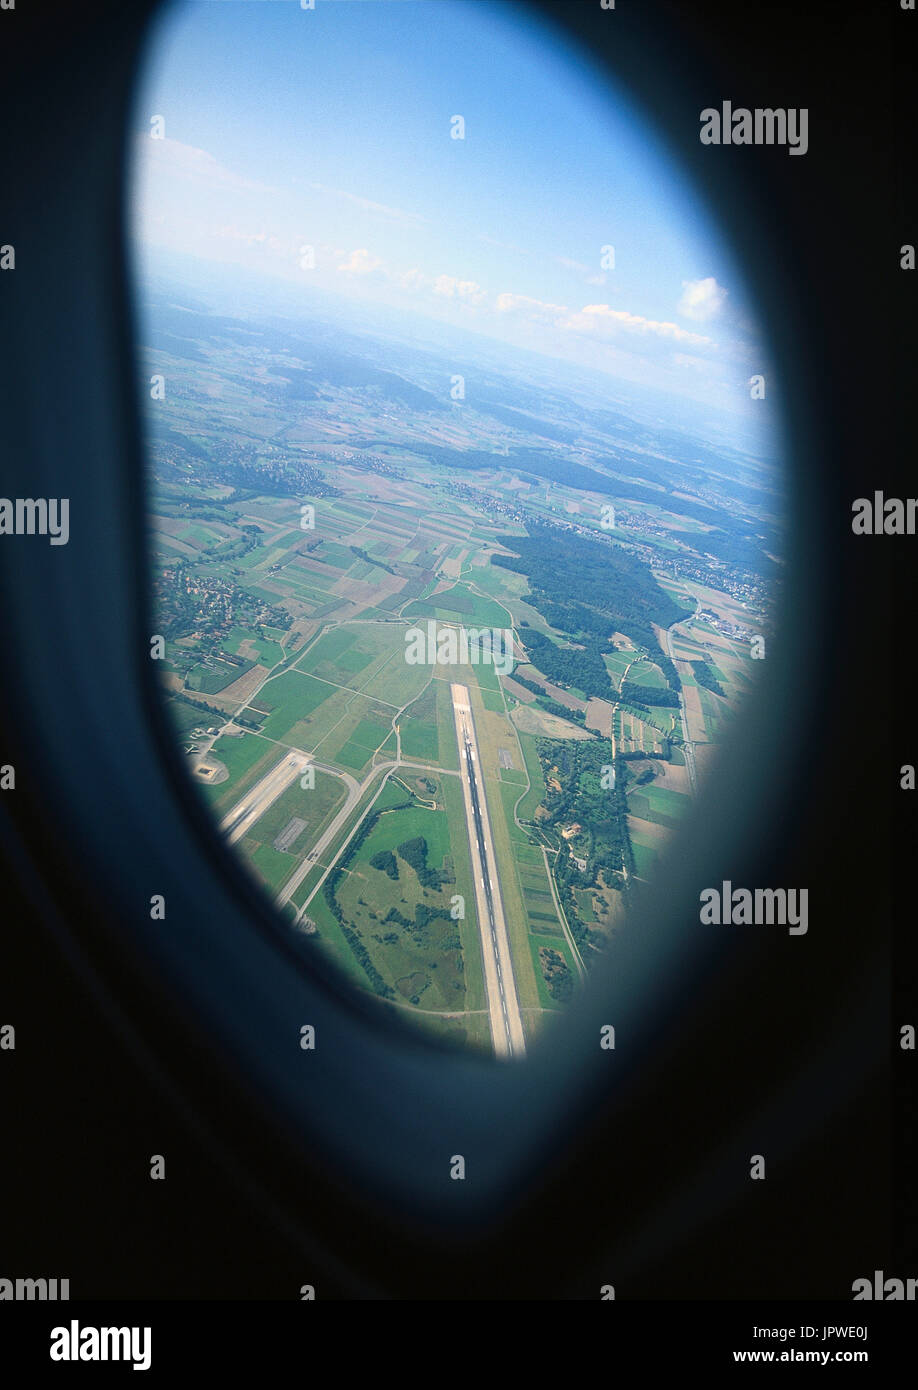 passengers-eye-view from airliner window of airport runways Stock Photo